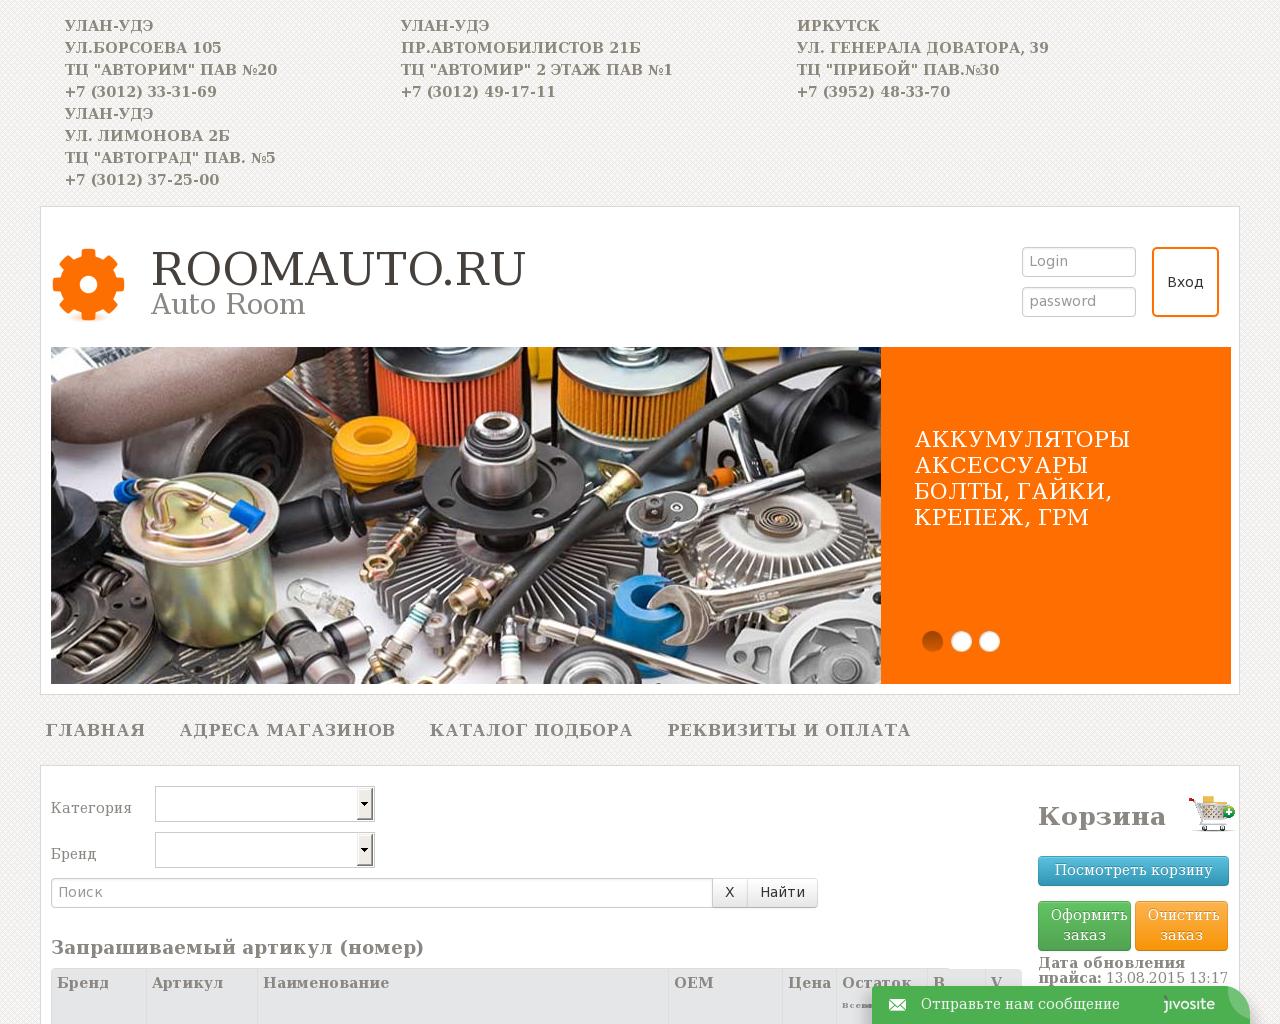 Изображение сайта roomauto.ru в разрешении 1280x1024